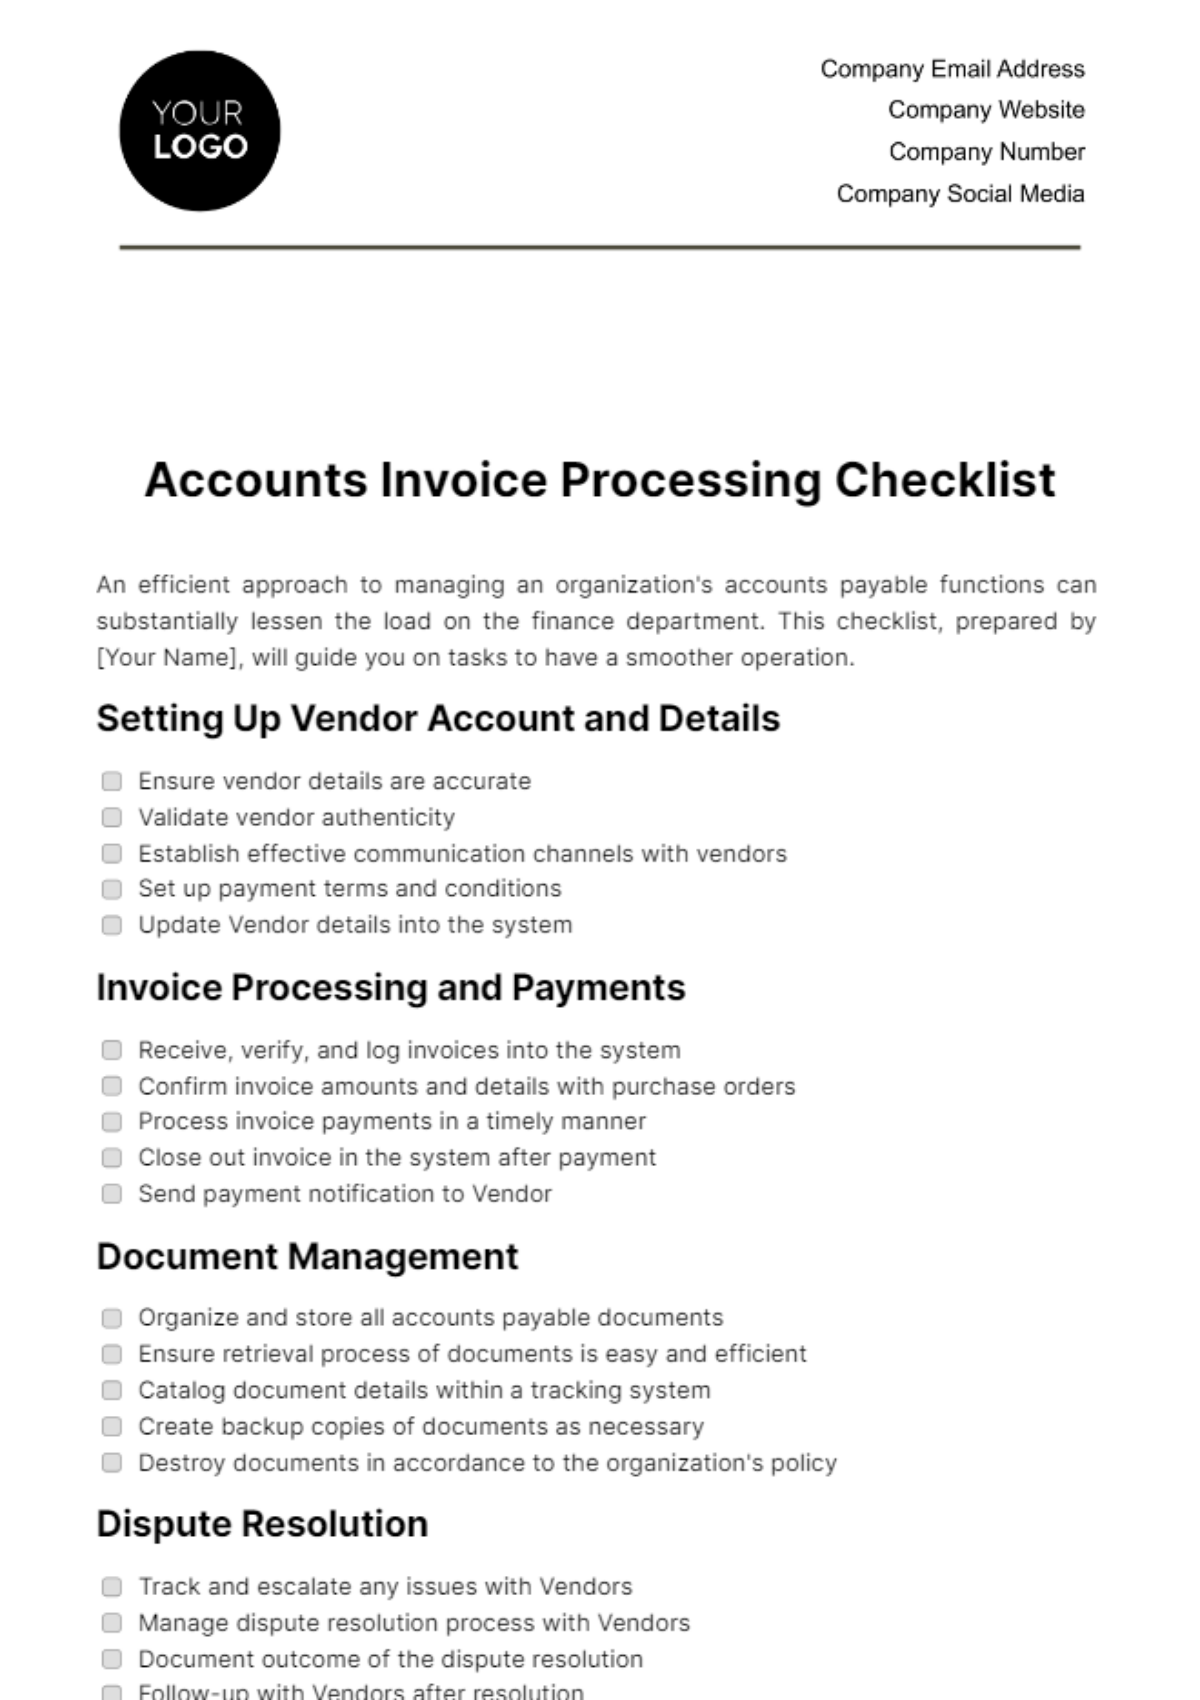 Accounts Invoice Processing Checklist Template